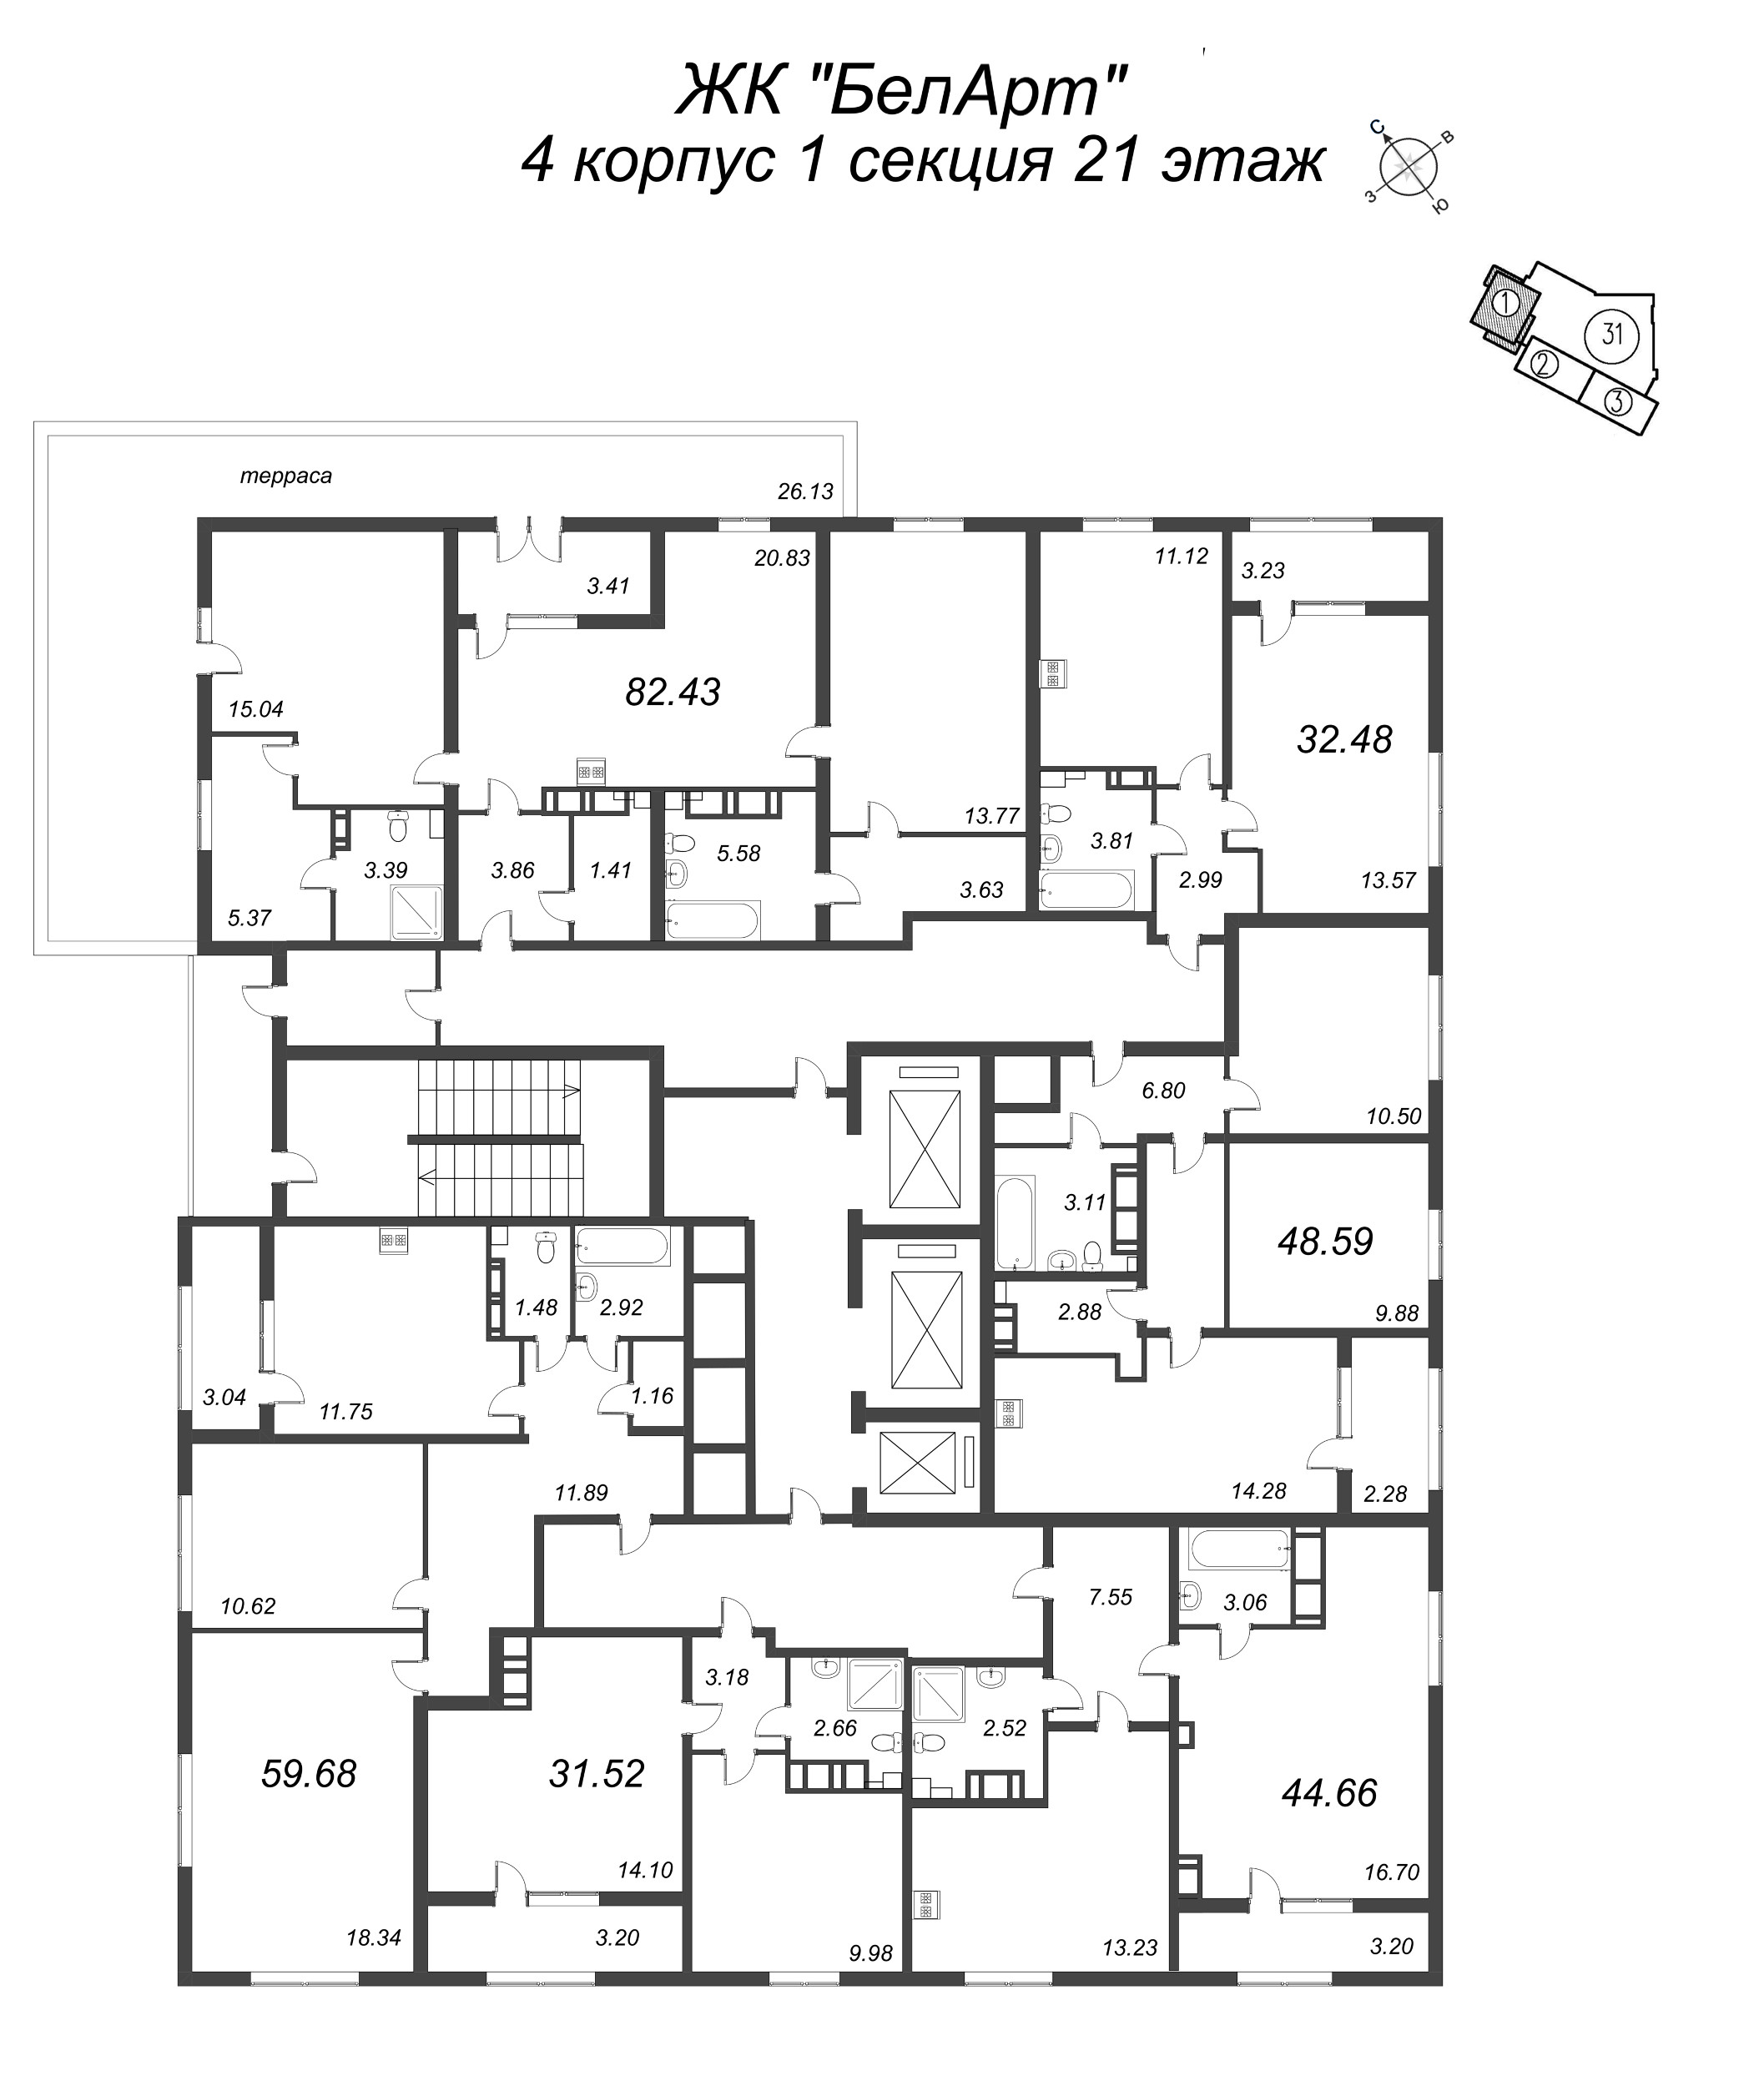 3-комнатная (Евро) квартира, 82.43 м² - планировка этажа